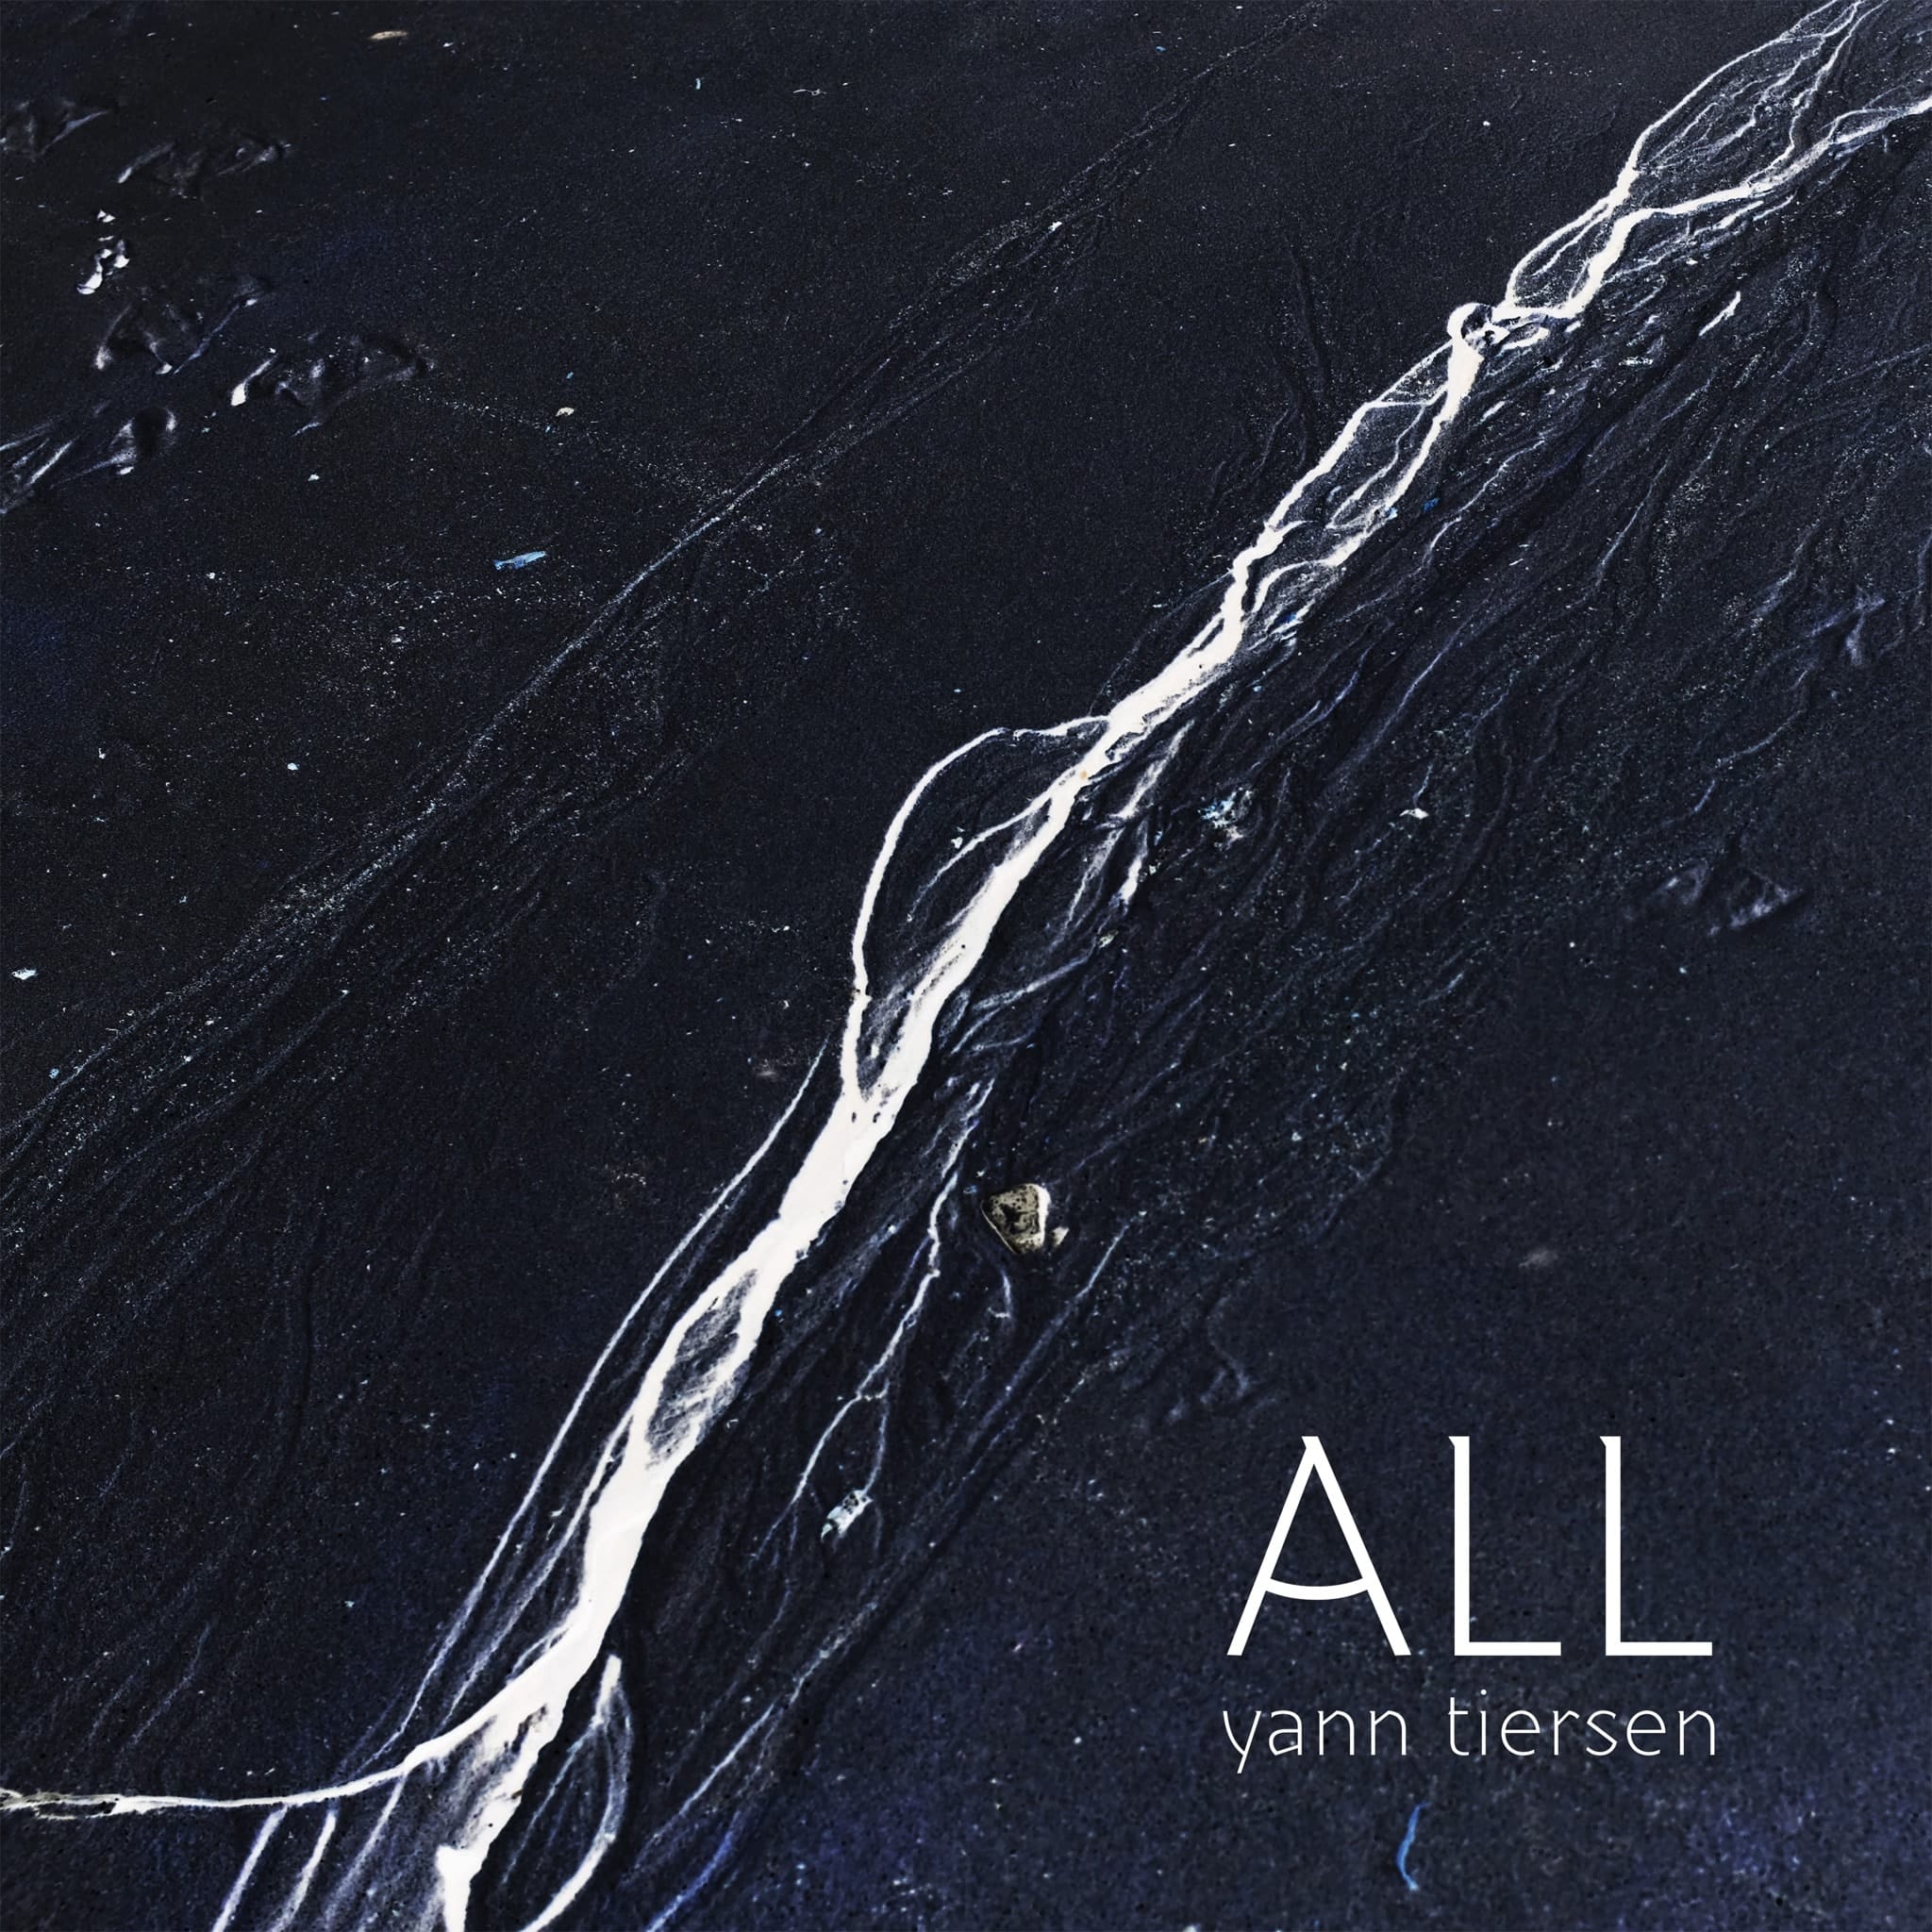 Yann Tiersen image pochette album musique ALL